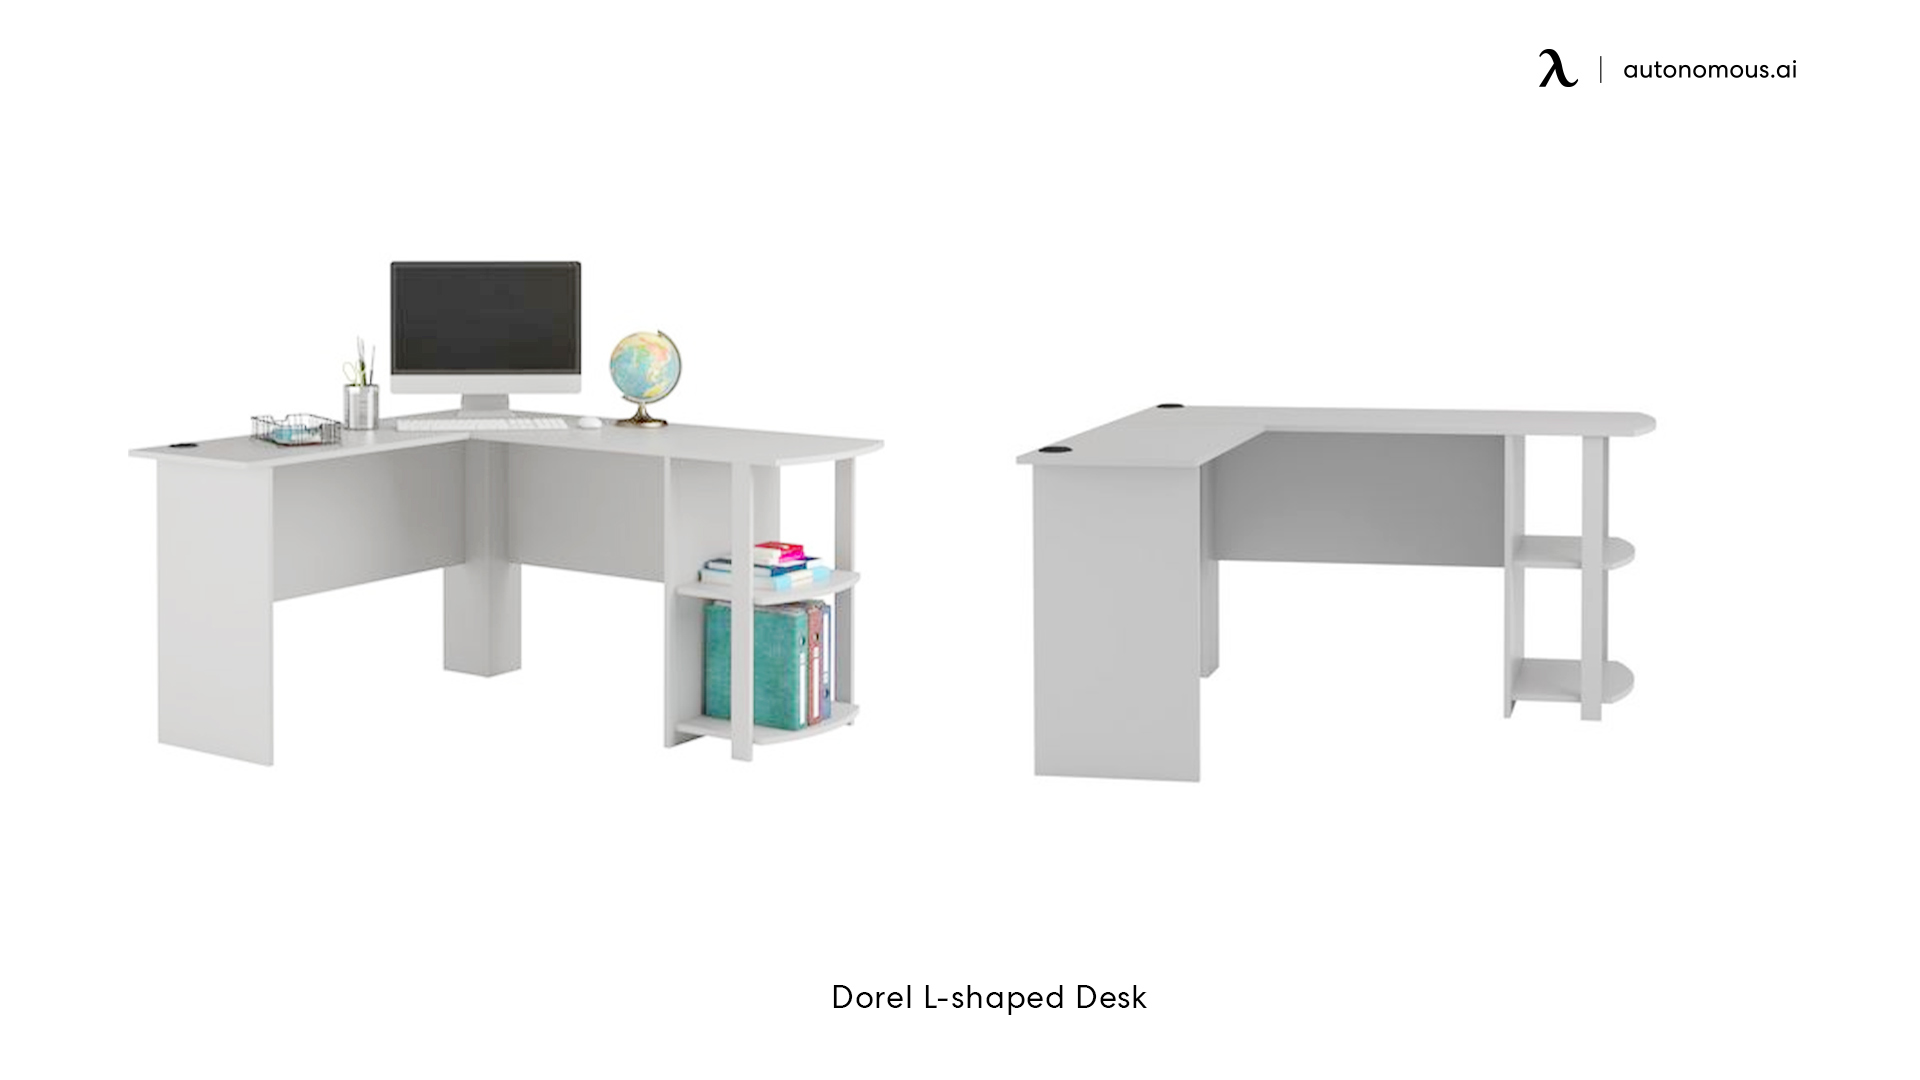 Dorel L-shaped Desk in Canada